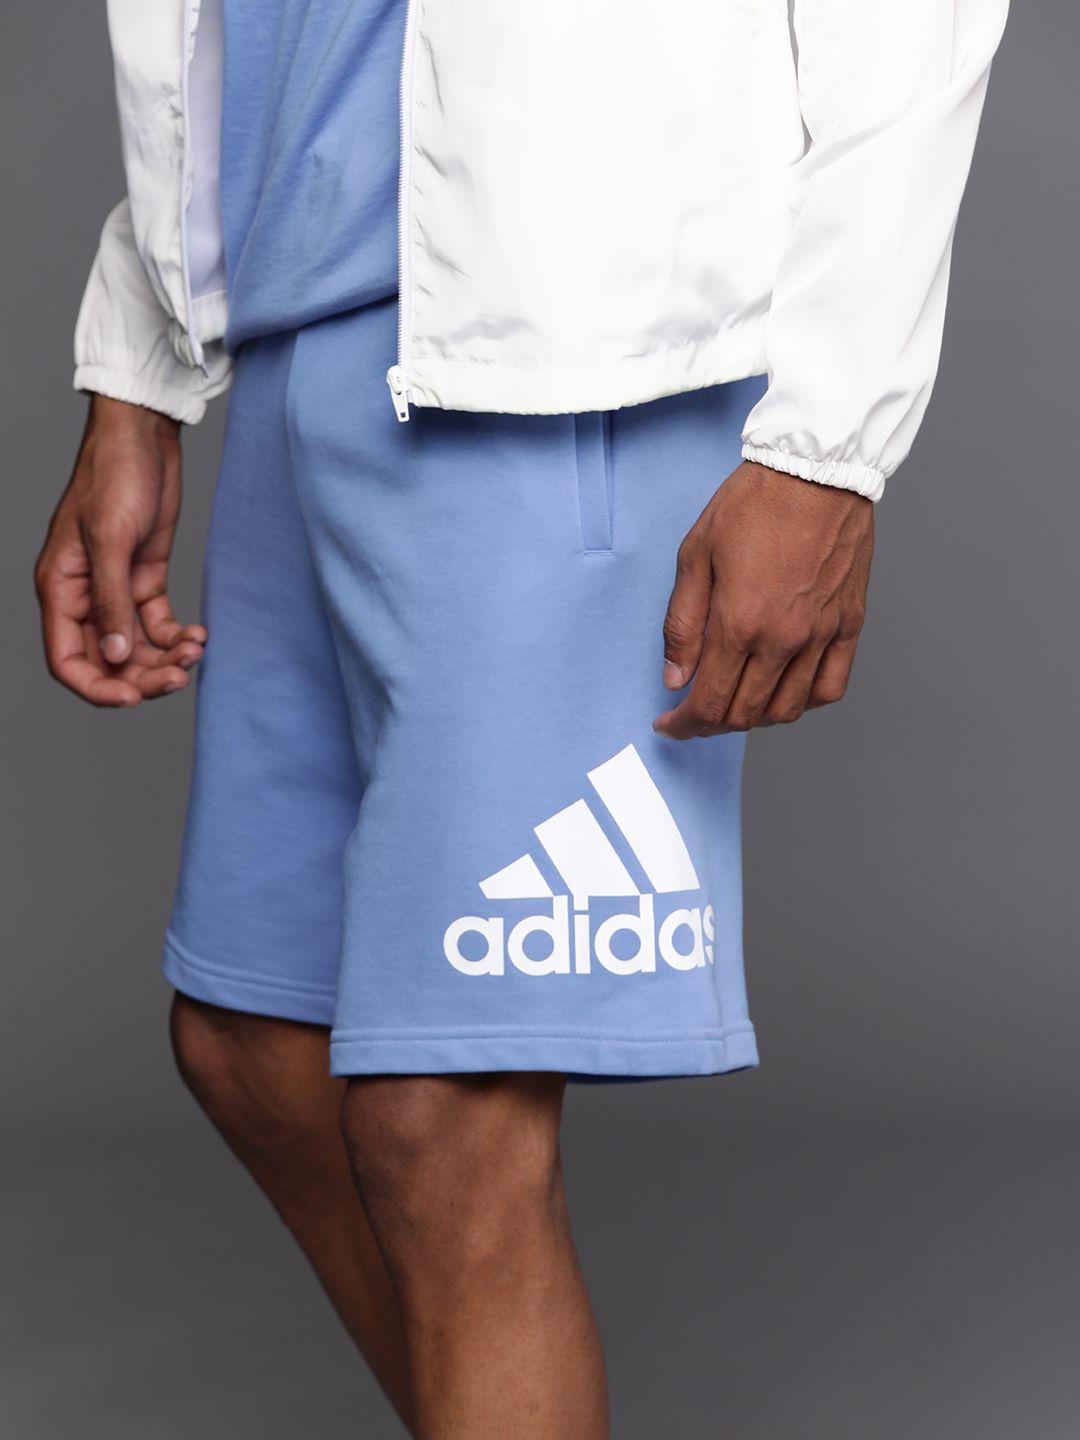 adidas men mh bosshortft brand logo printed sports shorts